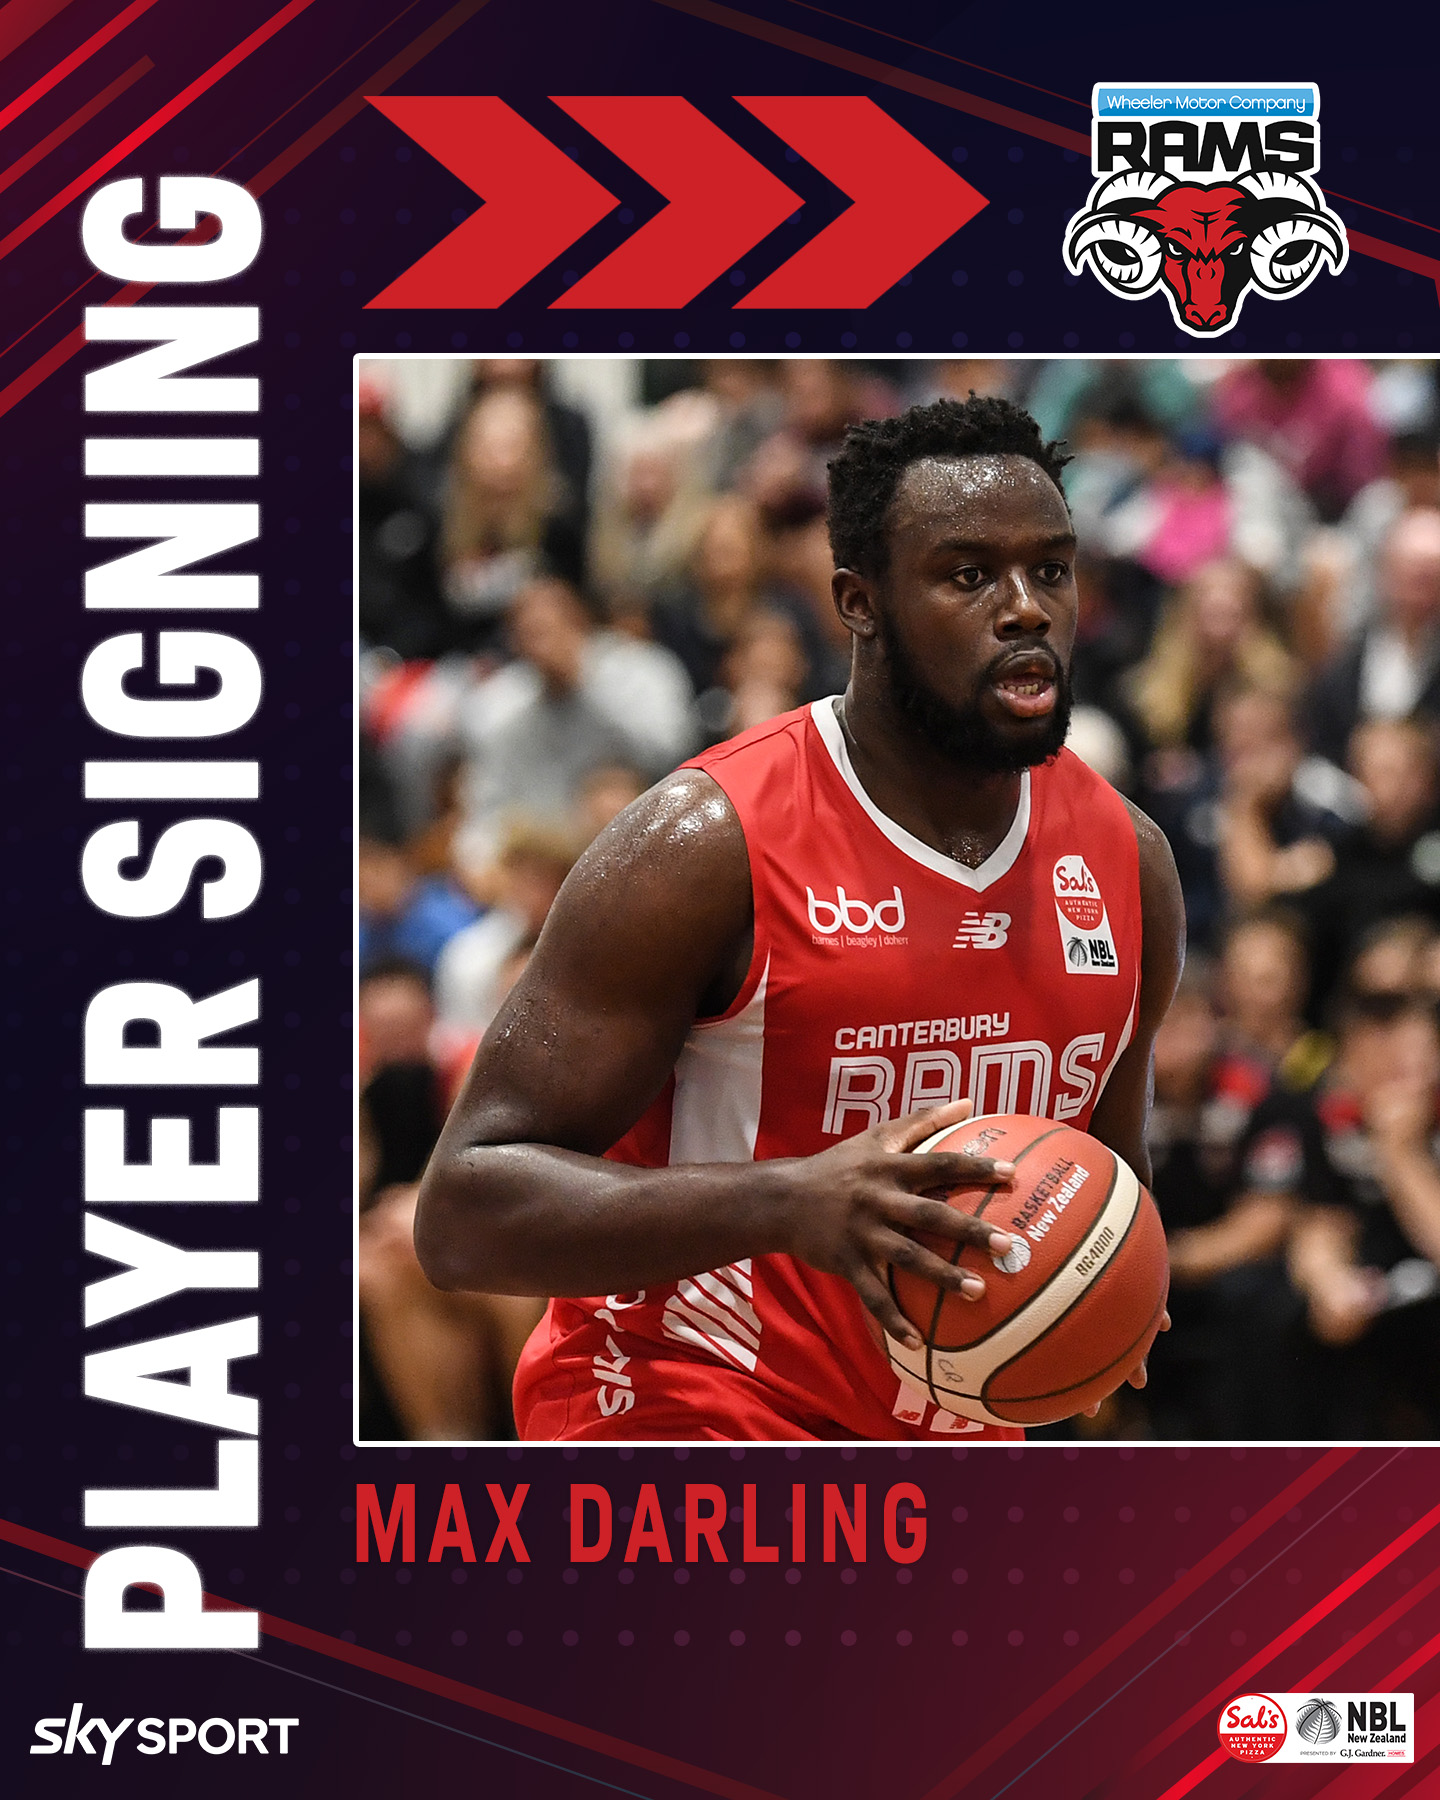 Max Darling